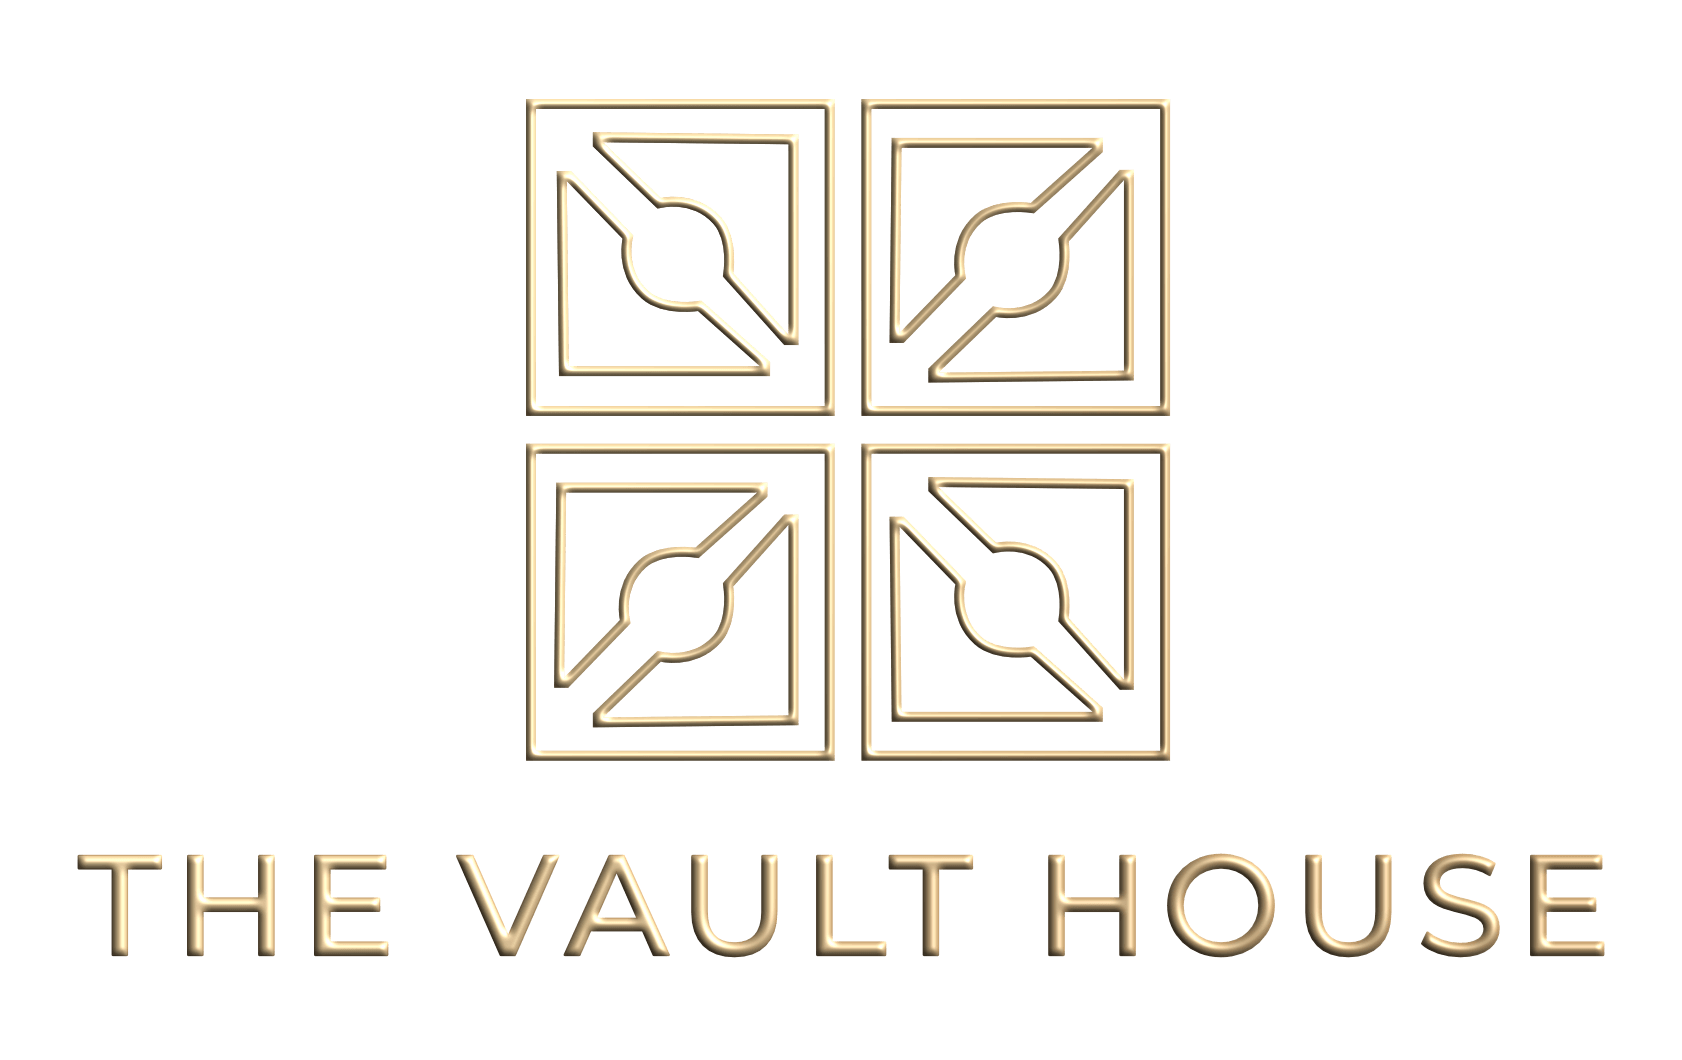 The vault house